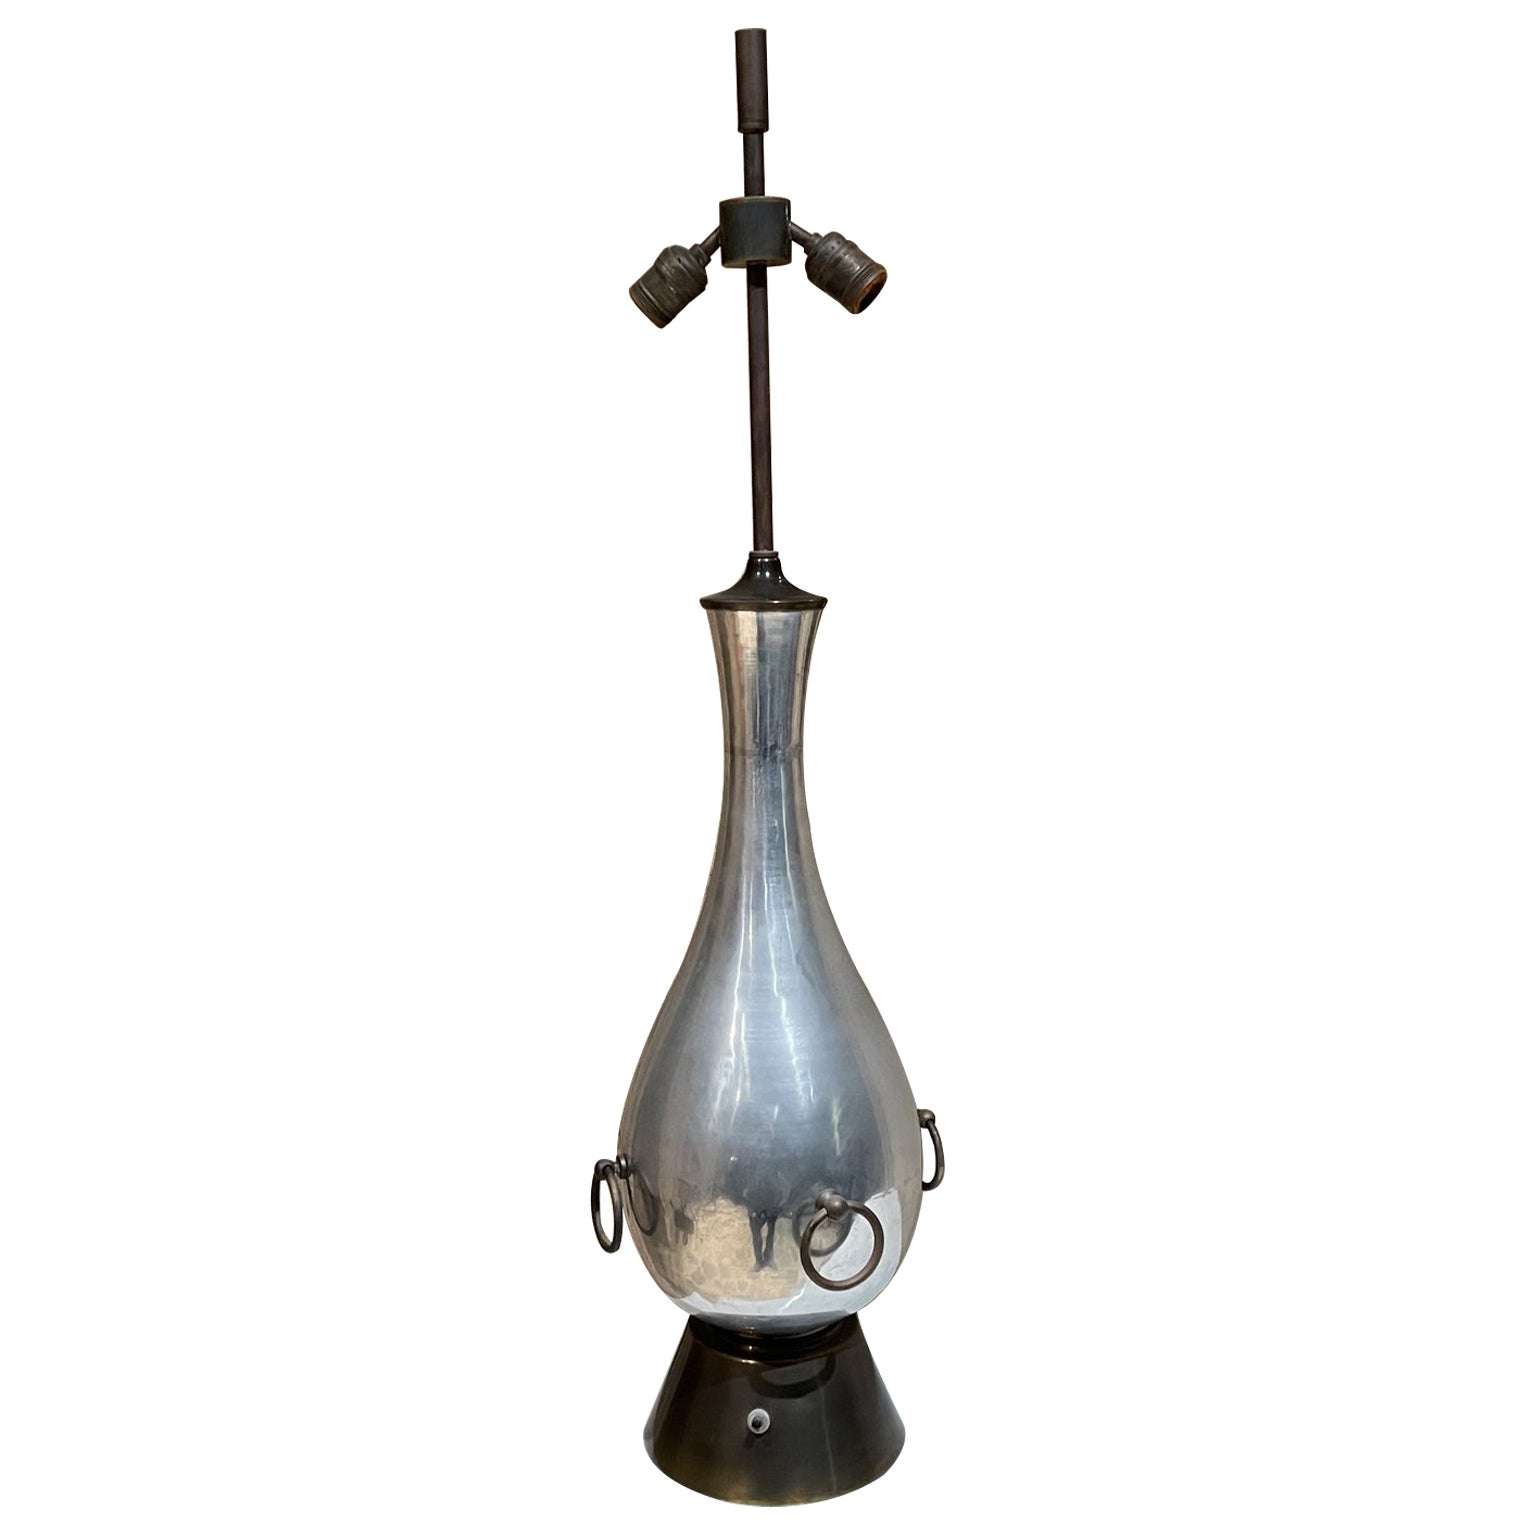 1950s Modernist Table Lamp Sculptural Aluminum & Brass Rings Arturo Pani Mexico